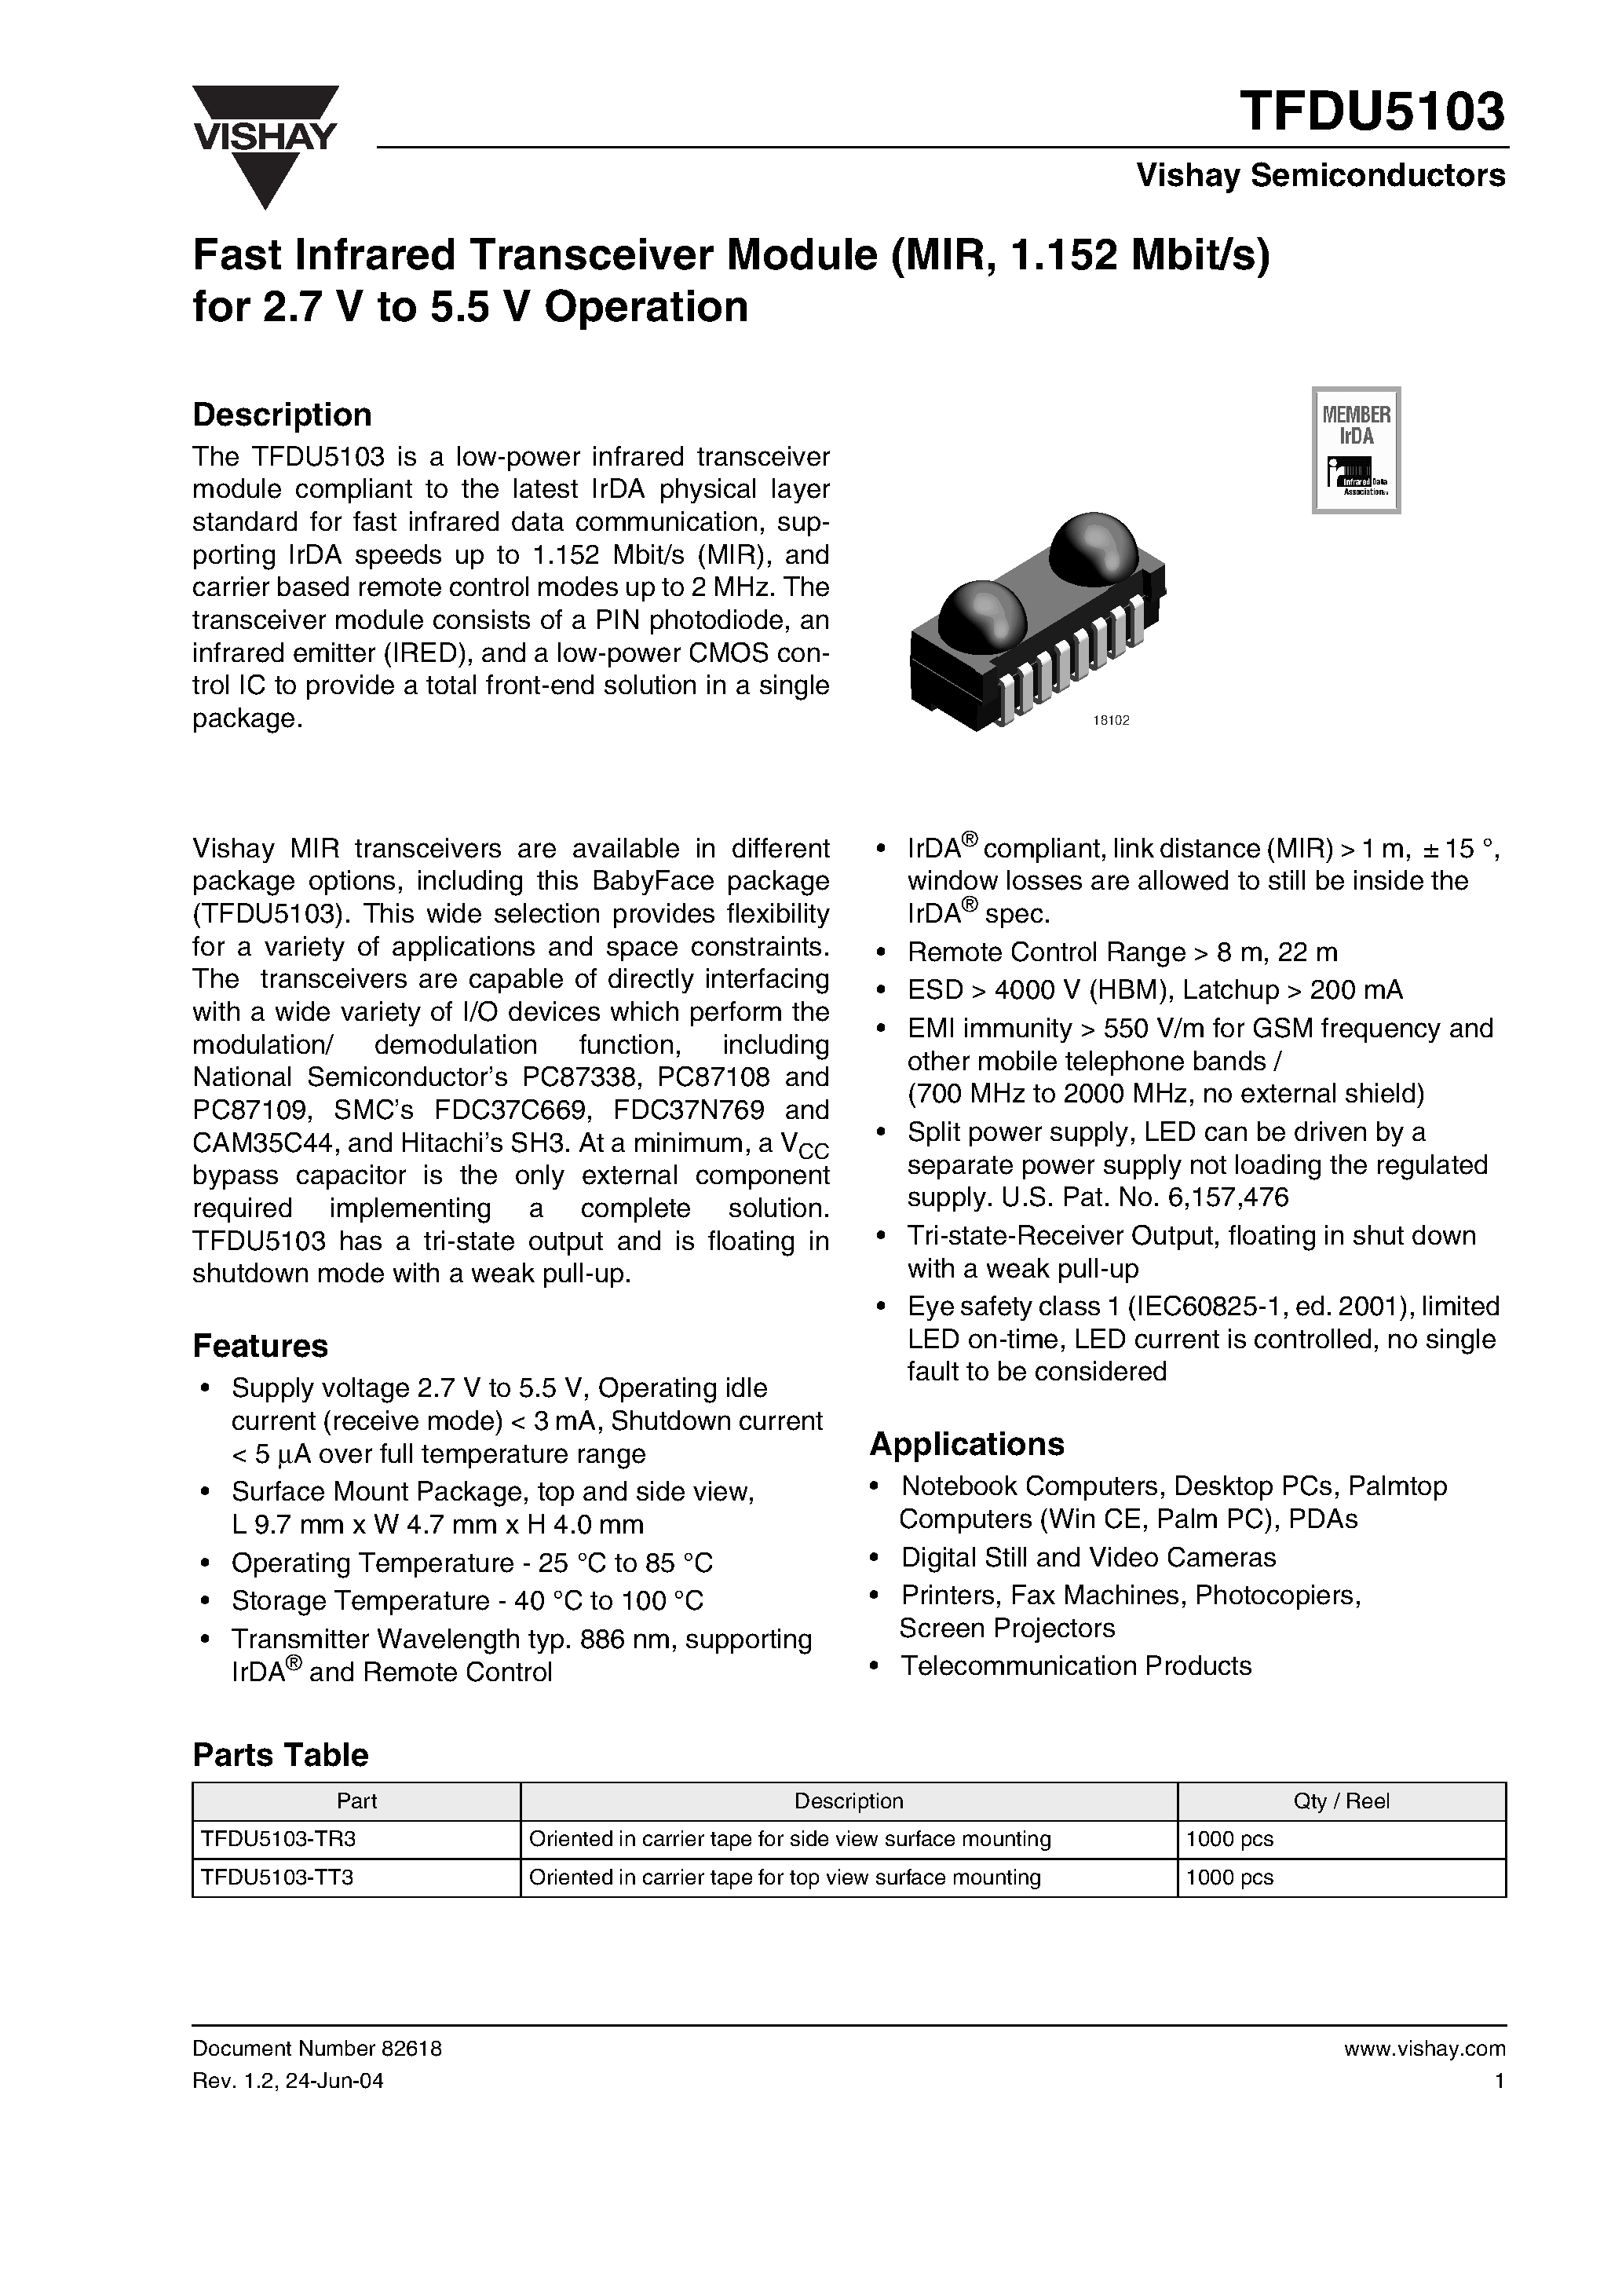 Datasheet TFDU5103-TR3 - Fast Infrared Transceiver Module (MIR/ 1.152 Mbit/s) for 2.7 V to 5.5 V Operation page 1